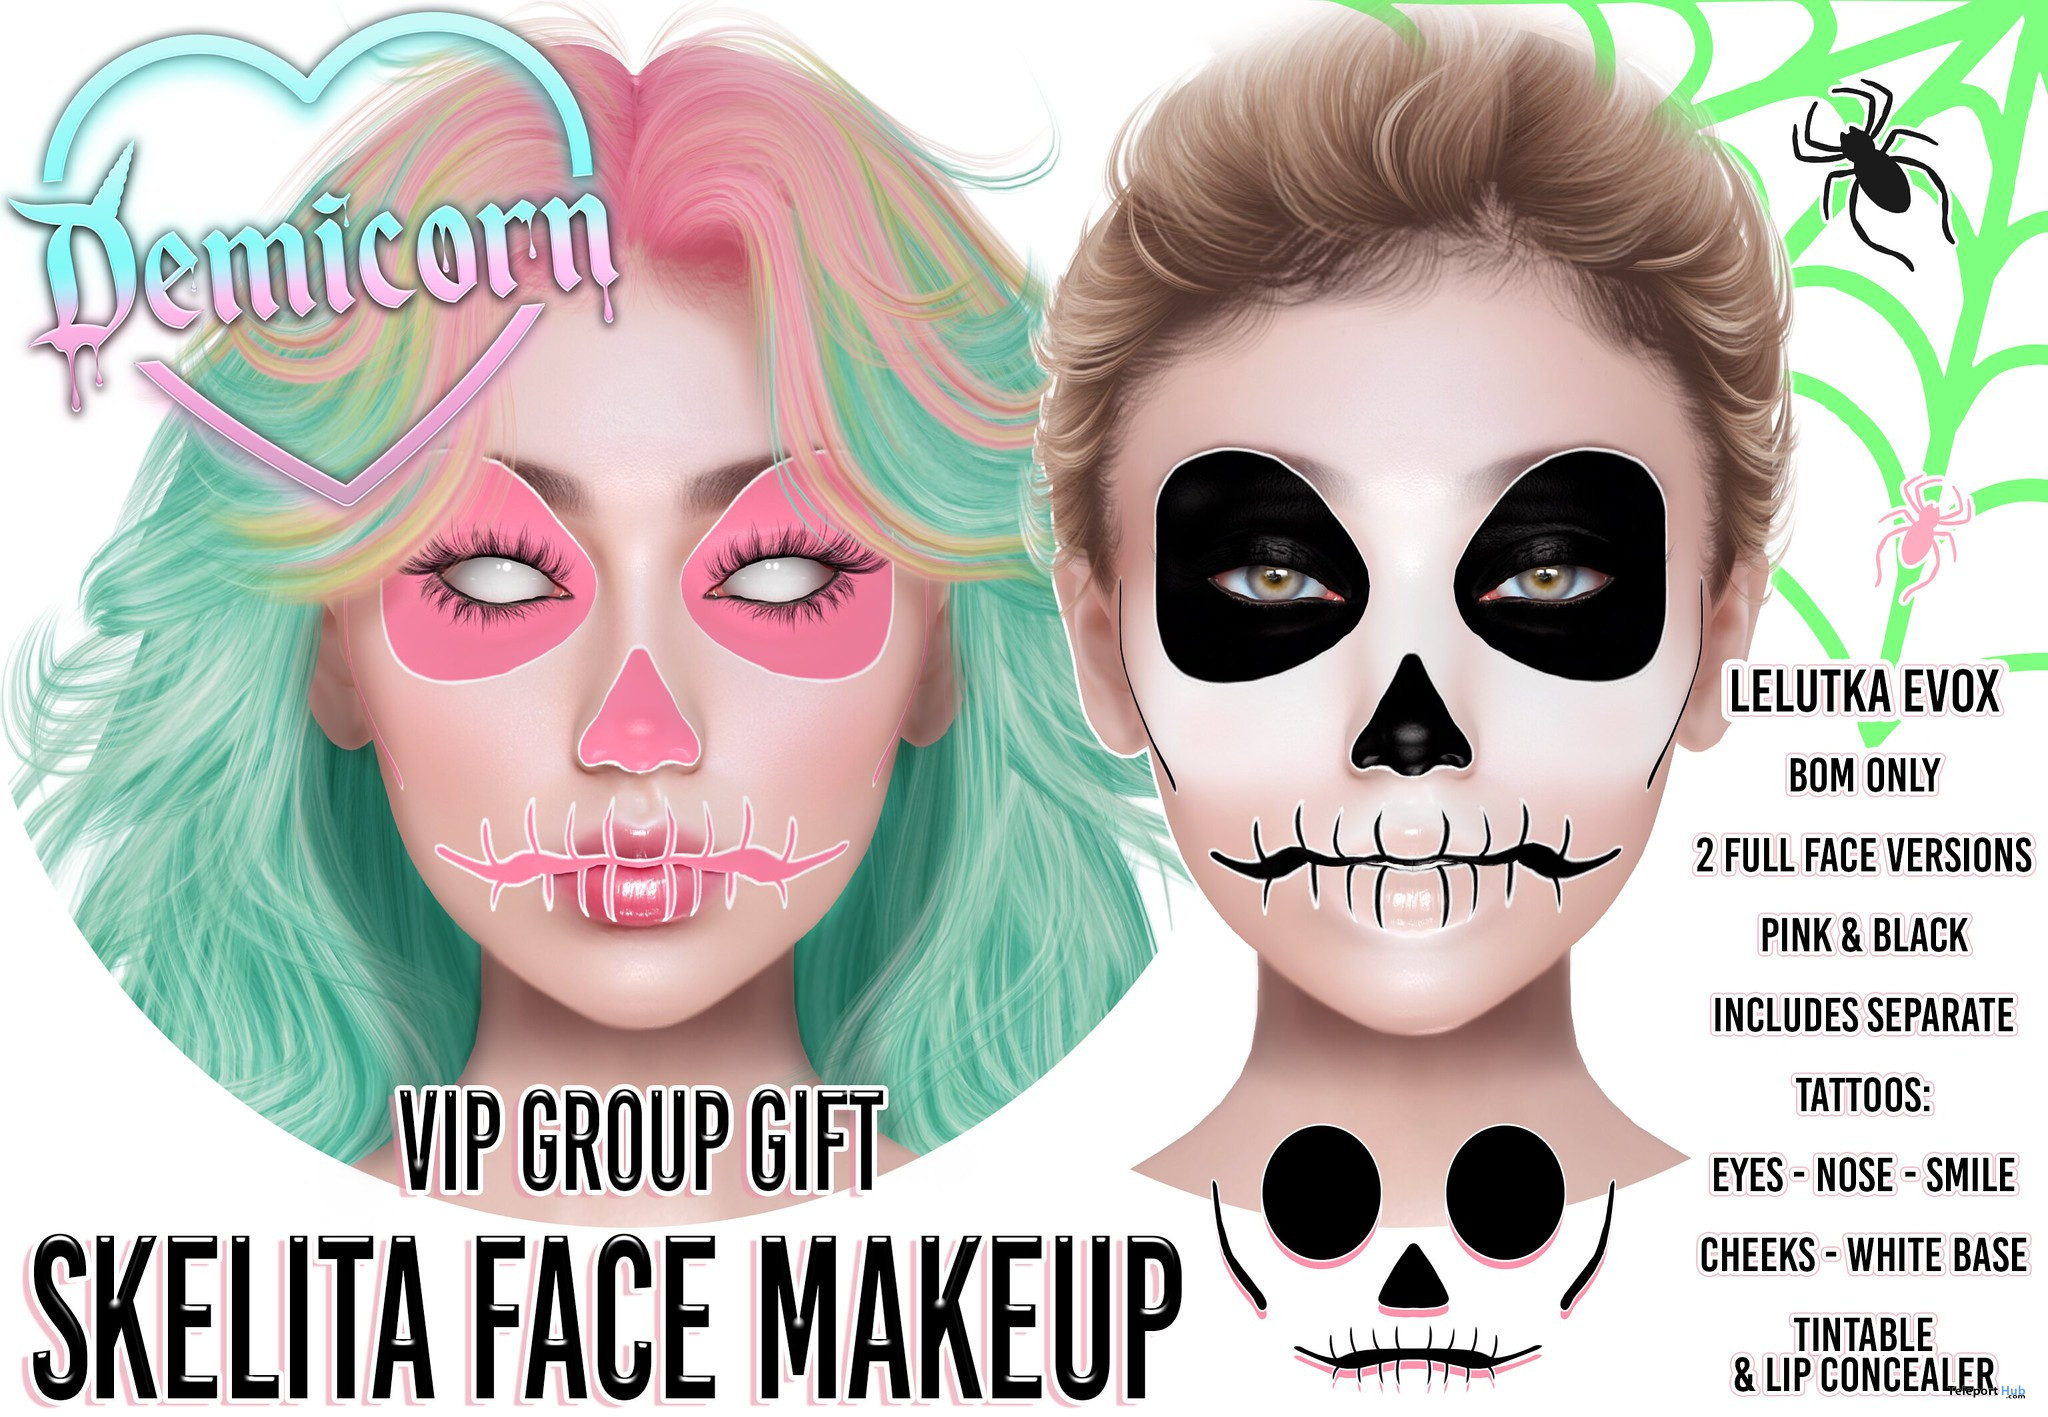 Skelita Face Makeup September 2022 Group Gift by DEMICORN - Teleport Hub - teleporthub.com